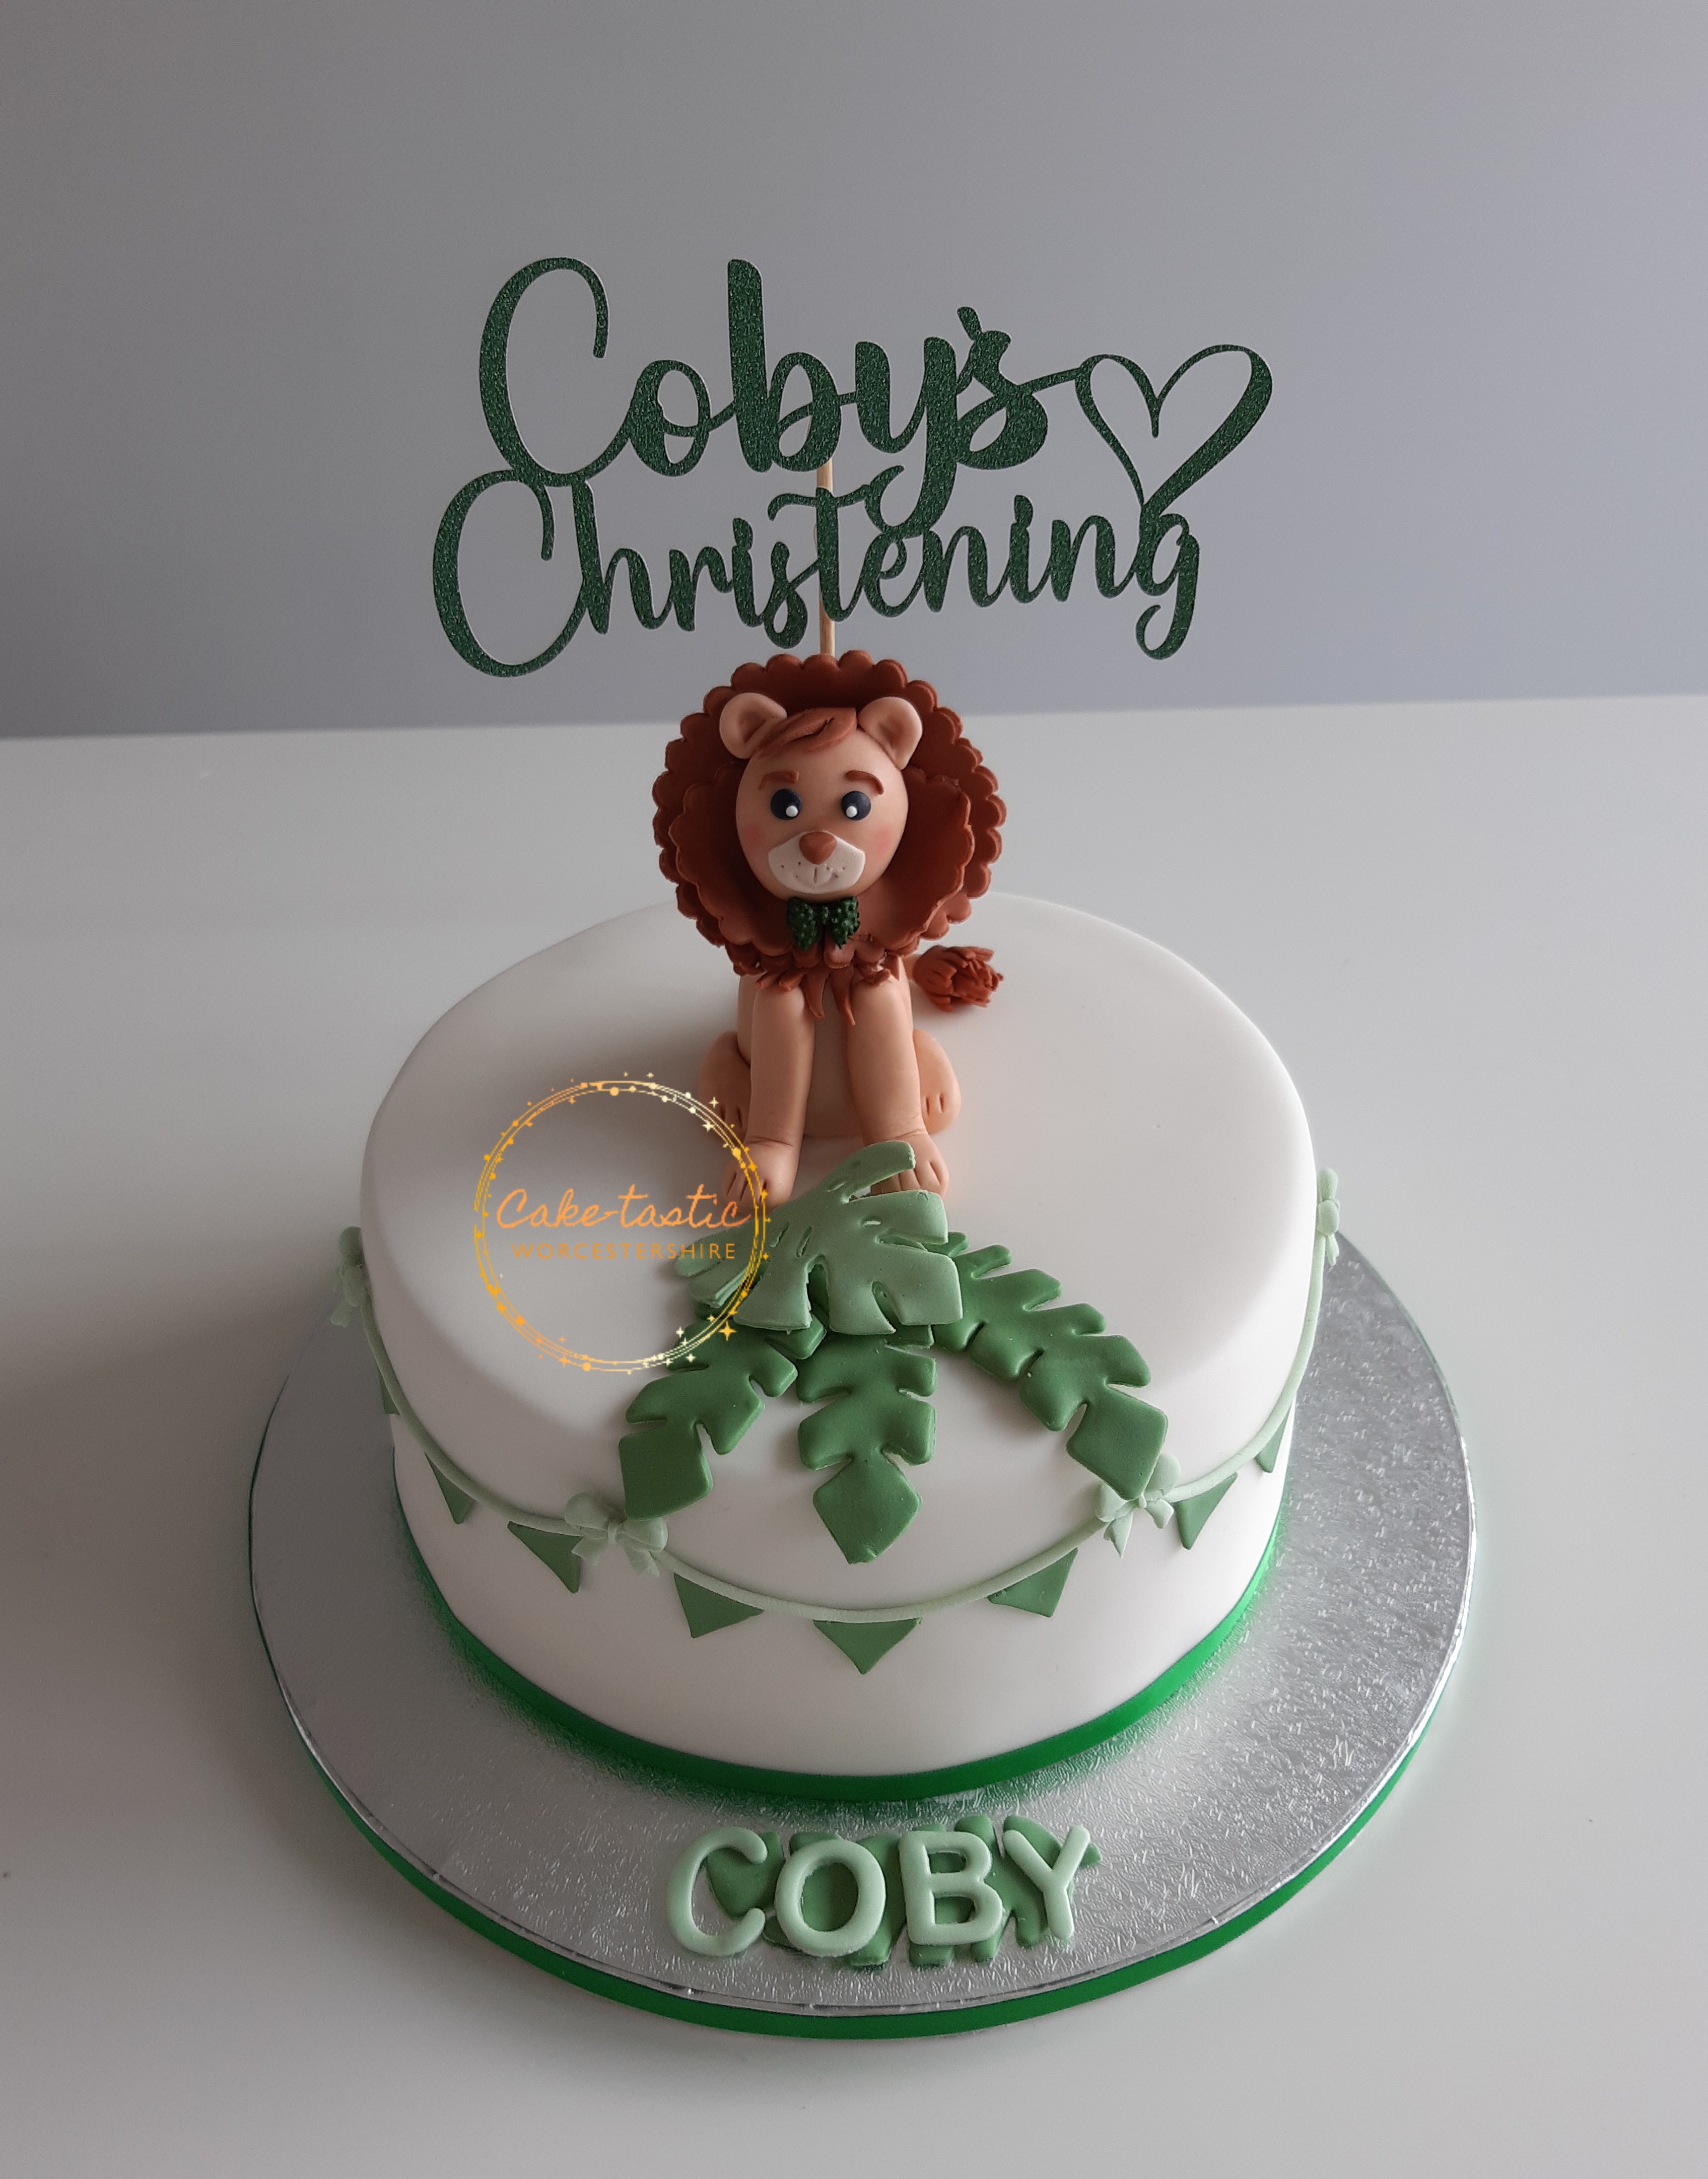 Coby Christening Cake